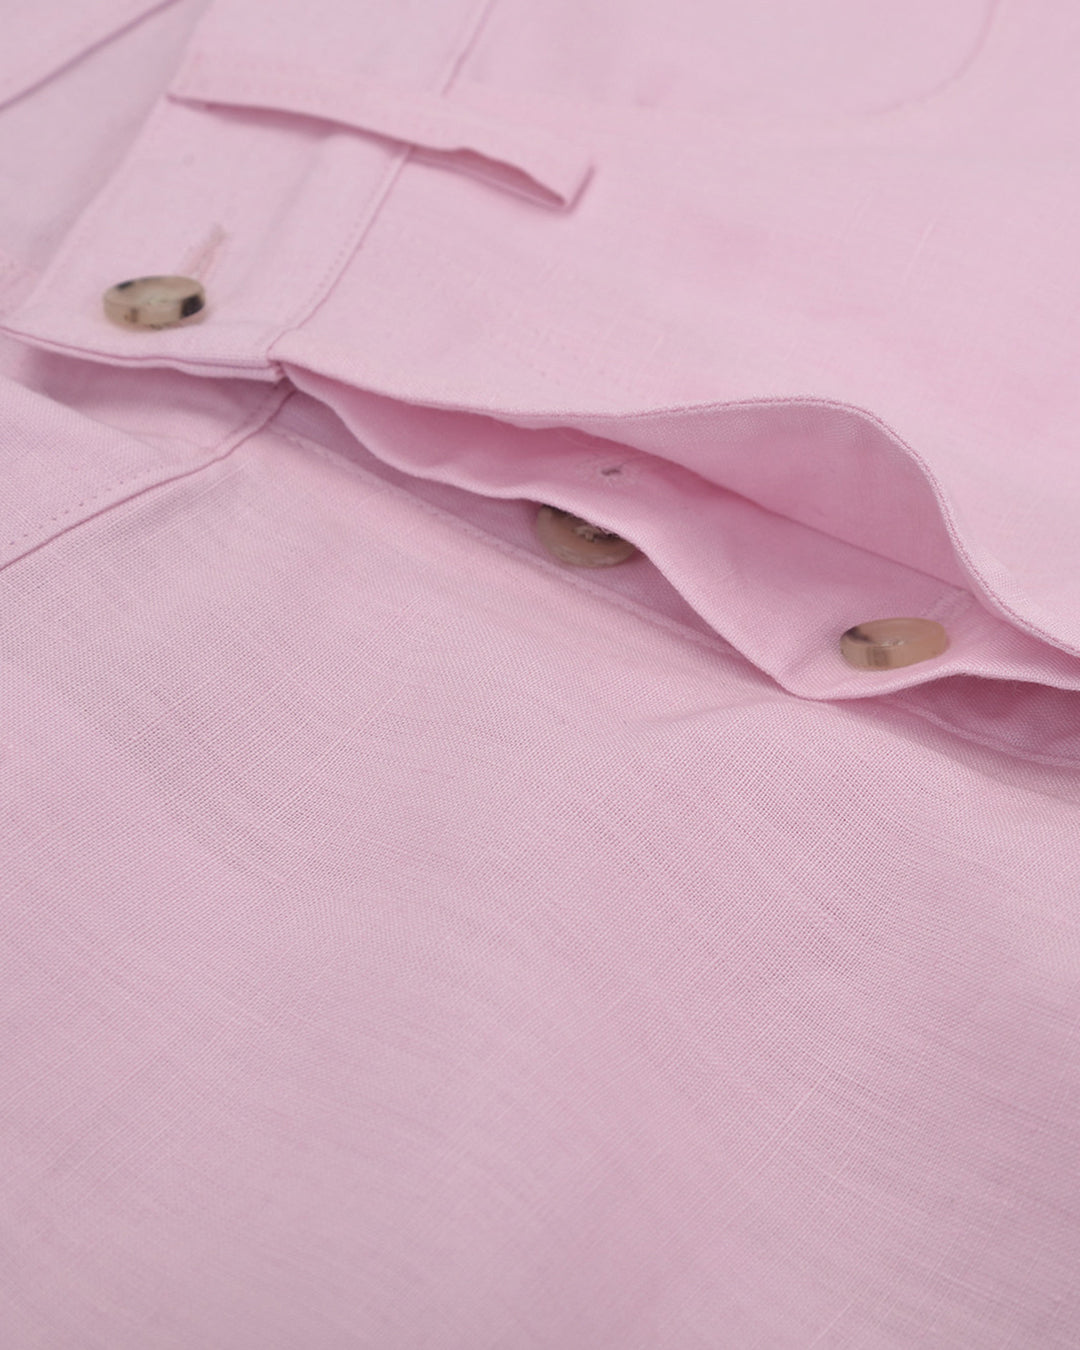 Dugdale Linen:Pink Plain